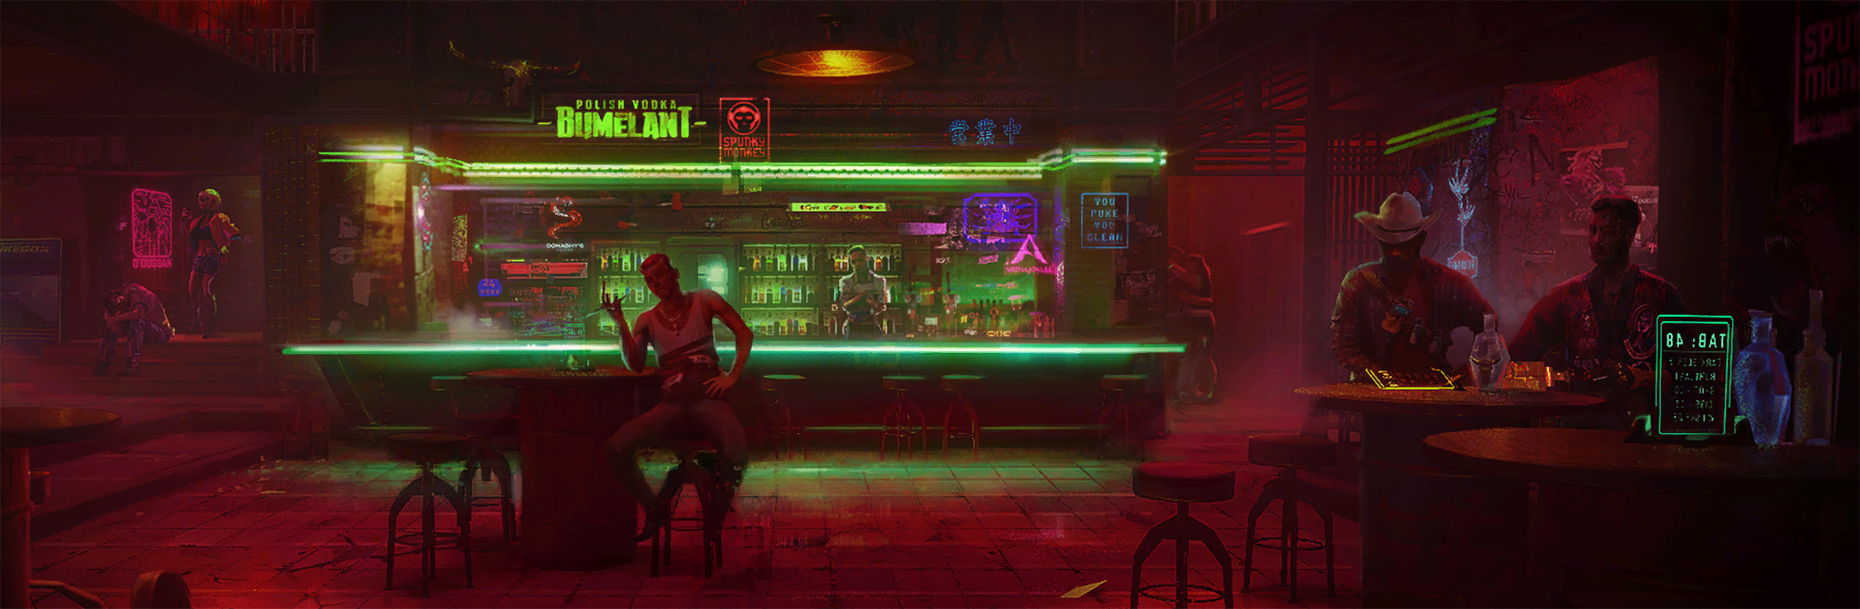 бар afterlife cyberpunk фото 111